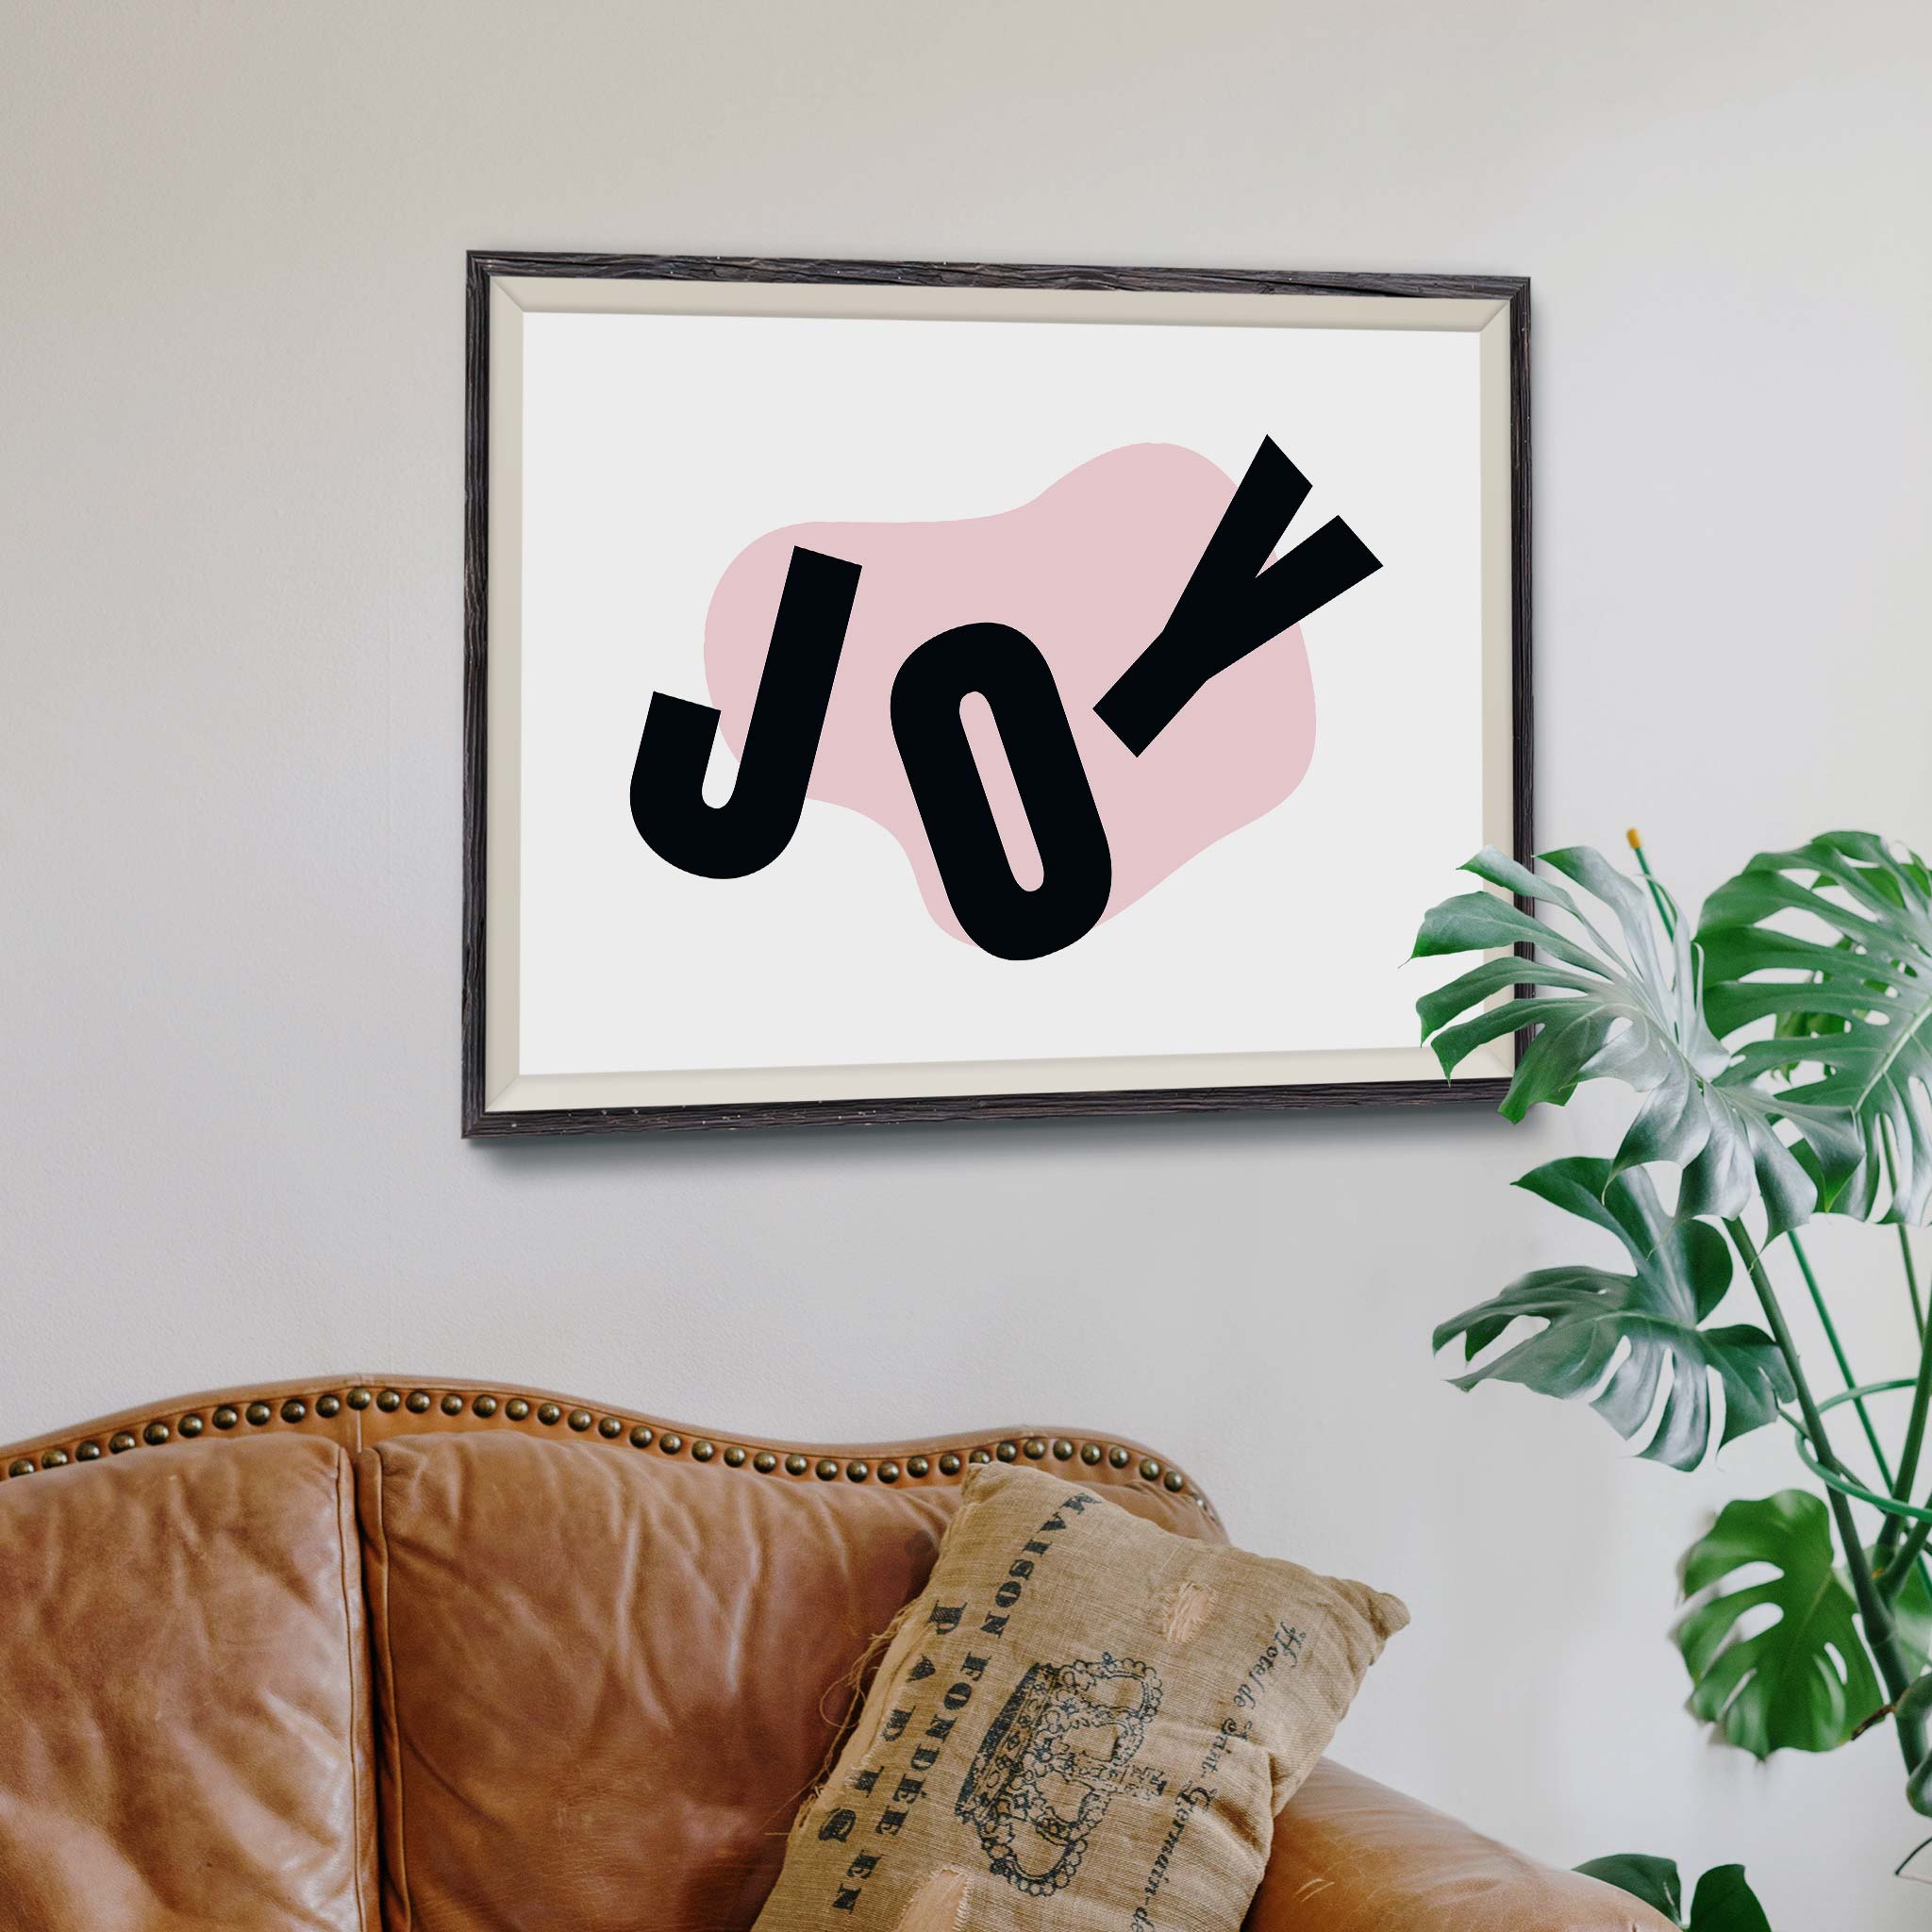 JOY (large letters spread across the canvas)